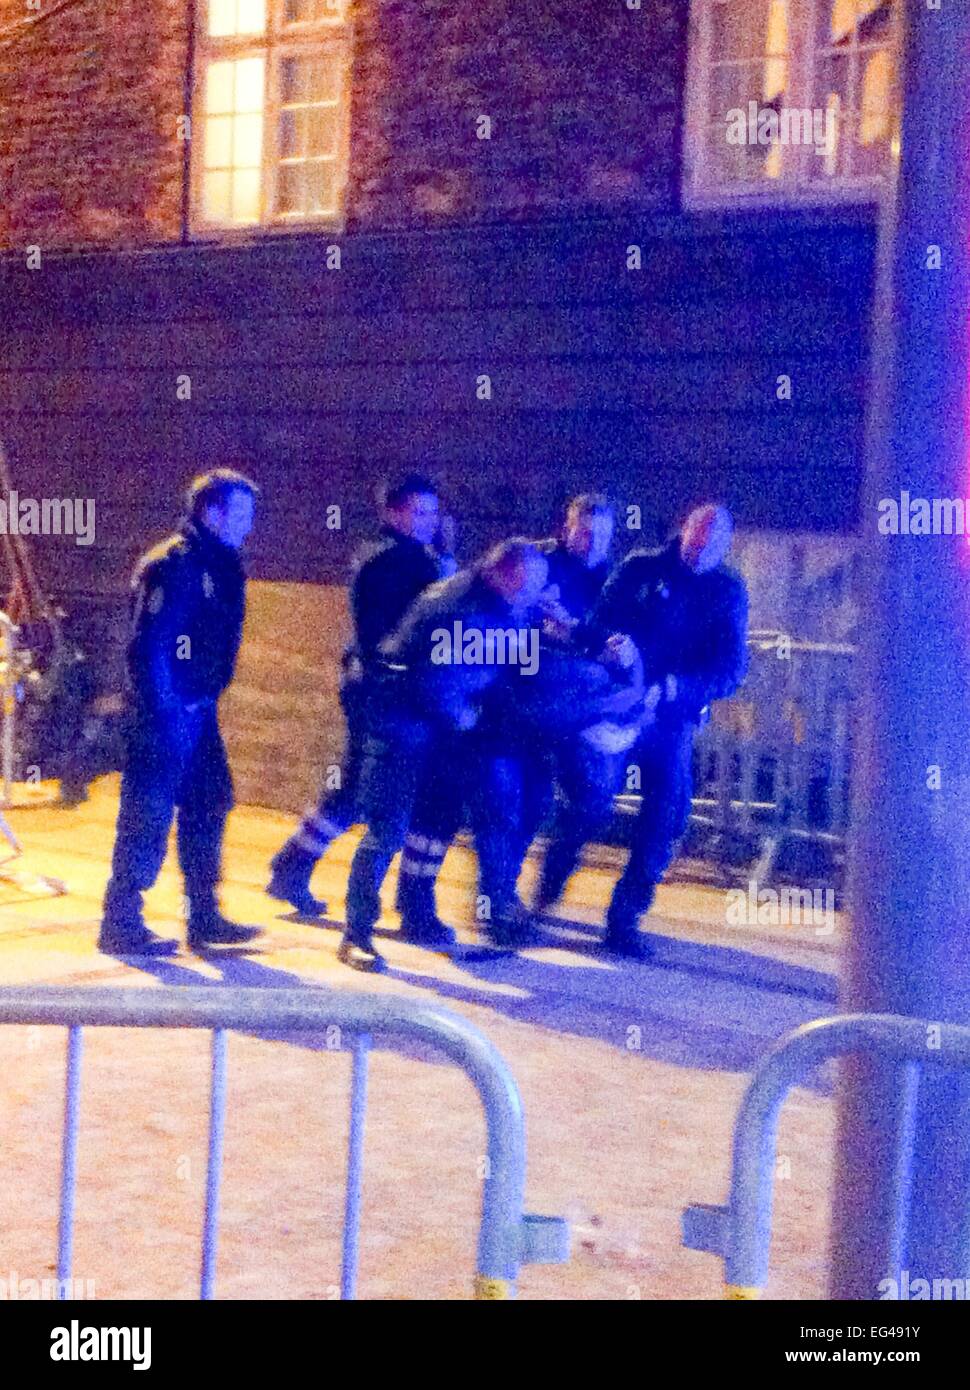 Copenhagen, Germany. 15th Feb, 2015. Police officers arrest a man after ...